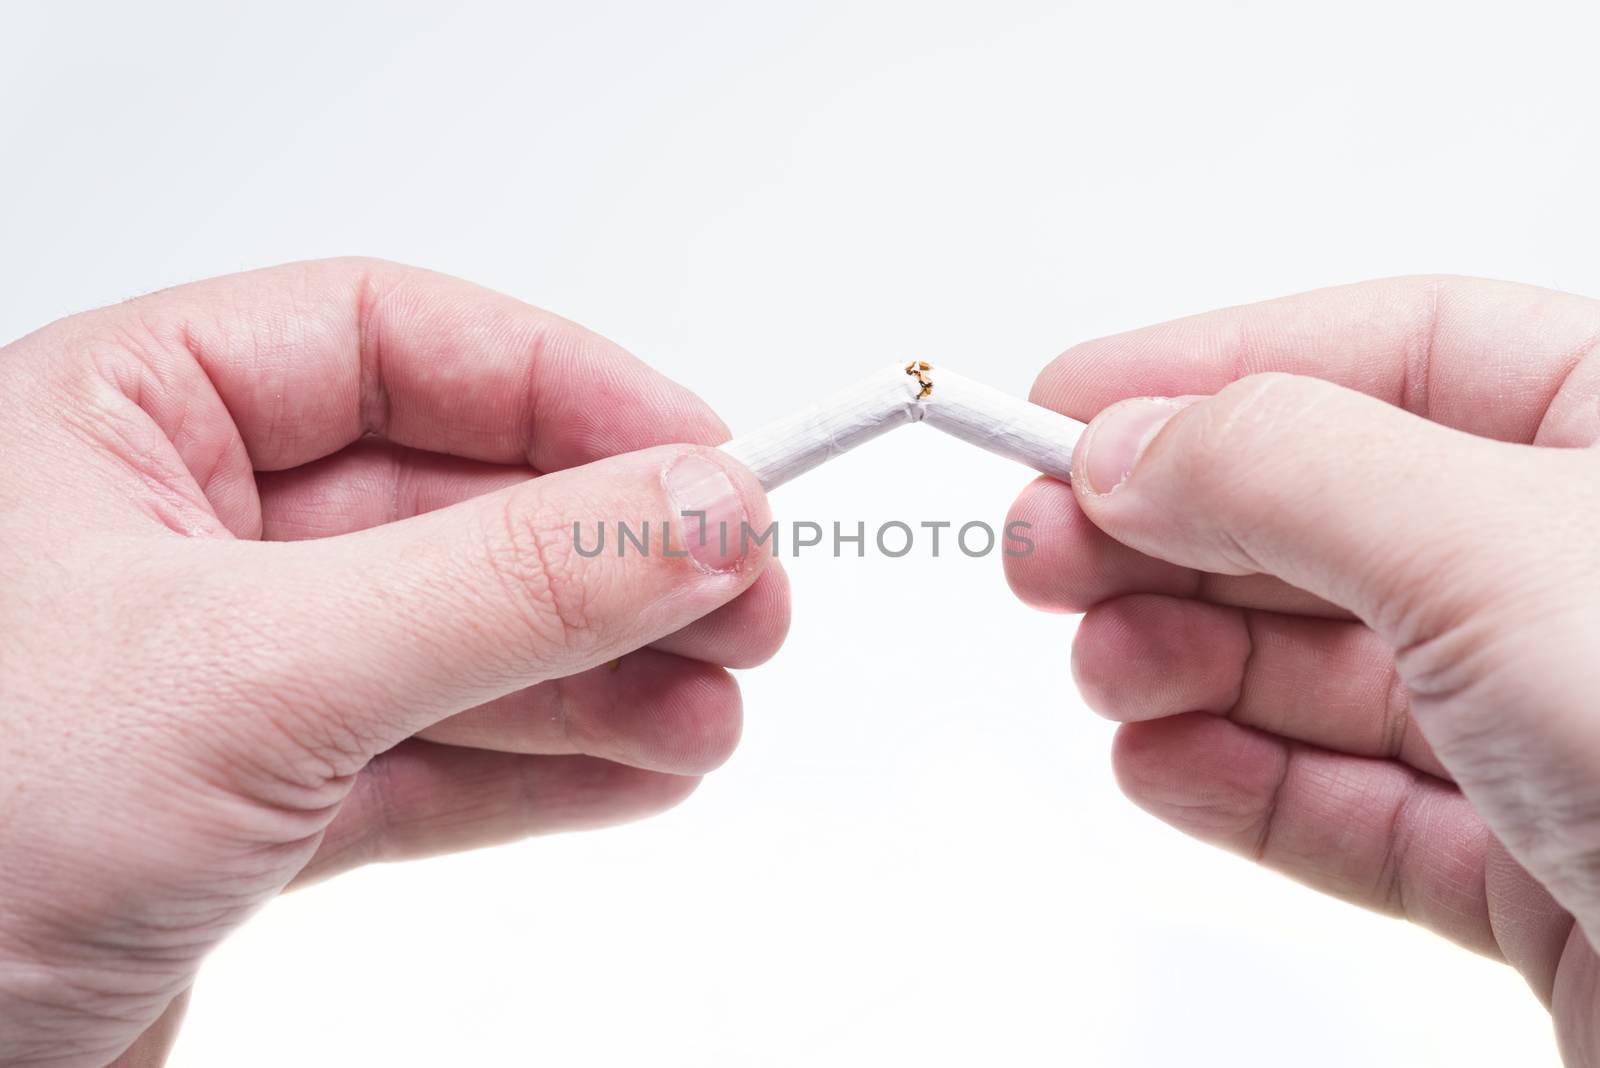 Broken cigarette in hands by savcoco